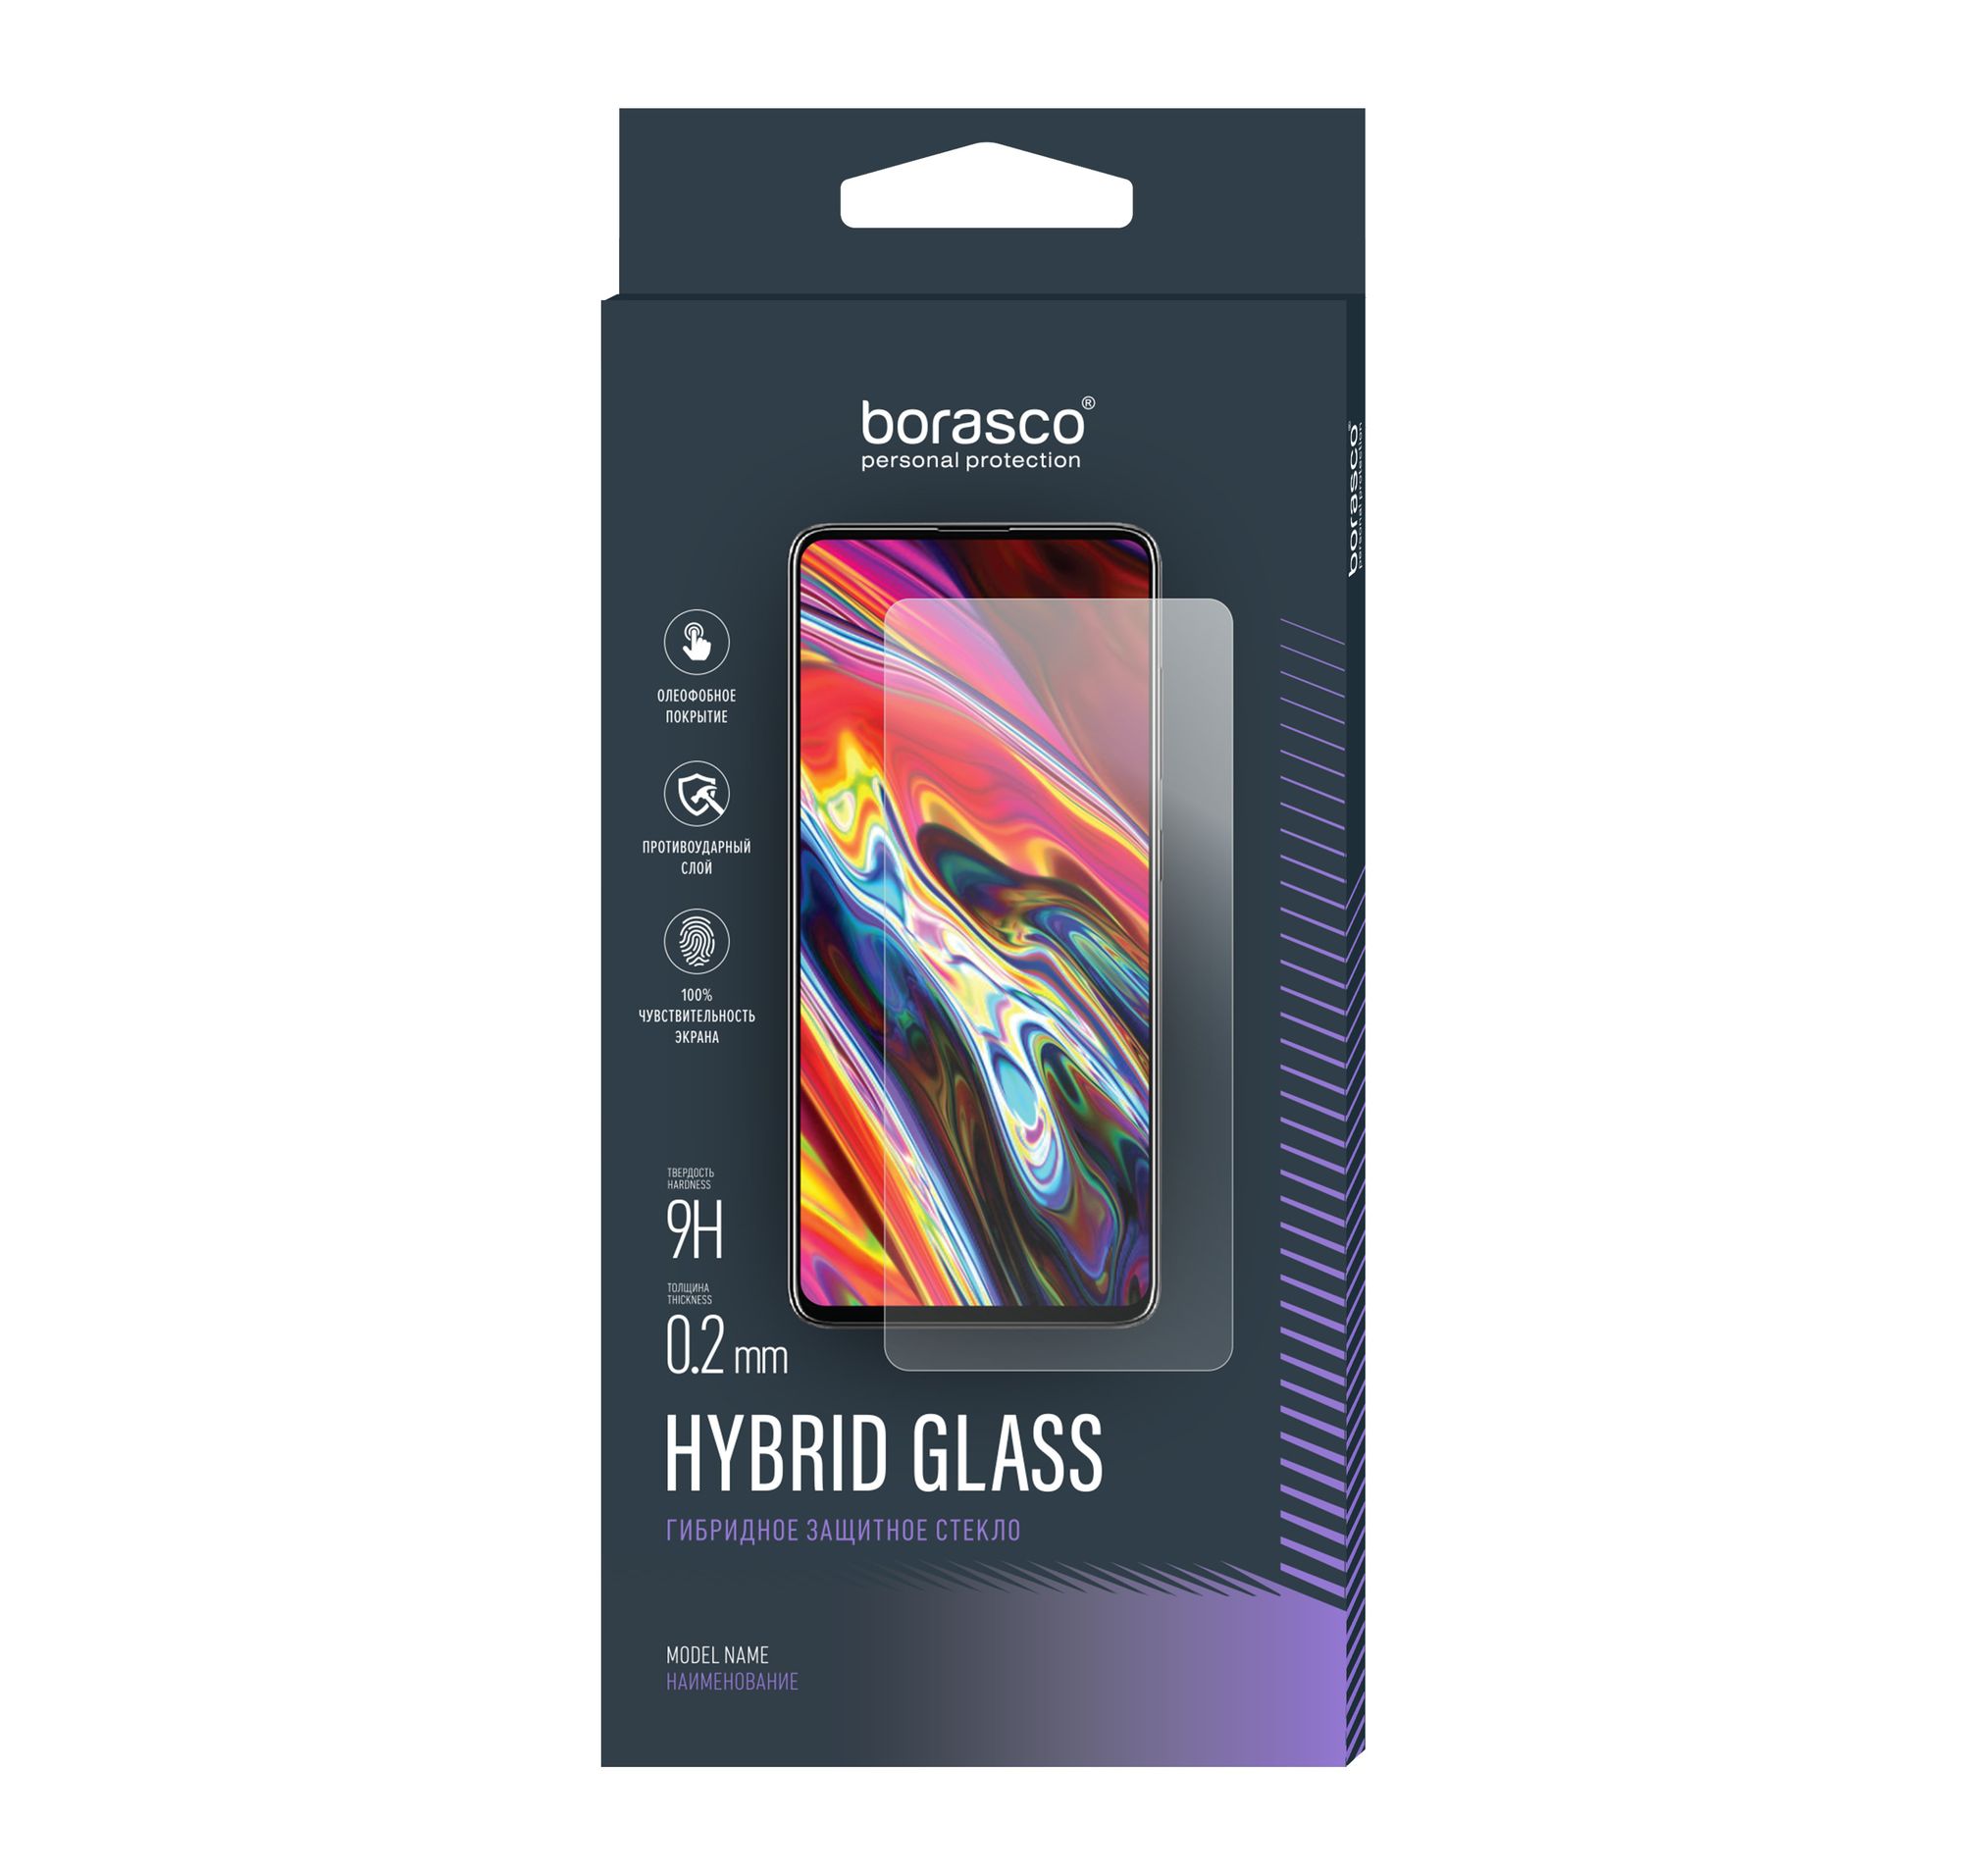 Стекло защитное Hybrid Glass VSP 0,26 мм для Huawei Y6 (2019)/ Honor 8A чехол книжка mypads premium для huawei honor 8a huawei y6 2019 honor 8a pro y6 prime 2019 huawei y6s из натуральной кожи с объемным 3d рель